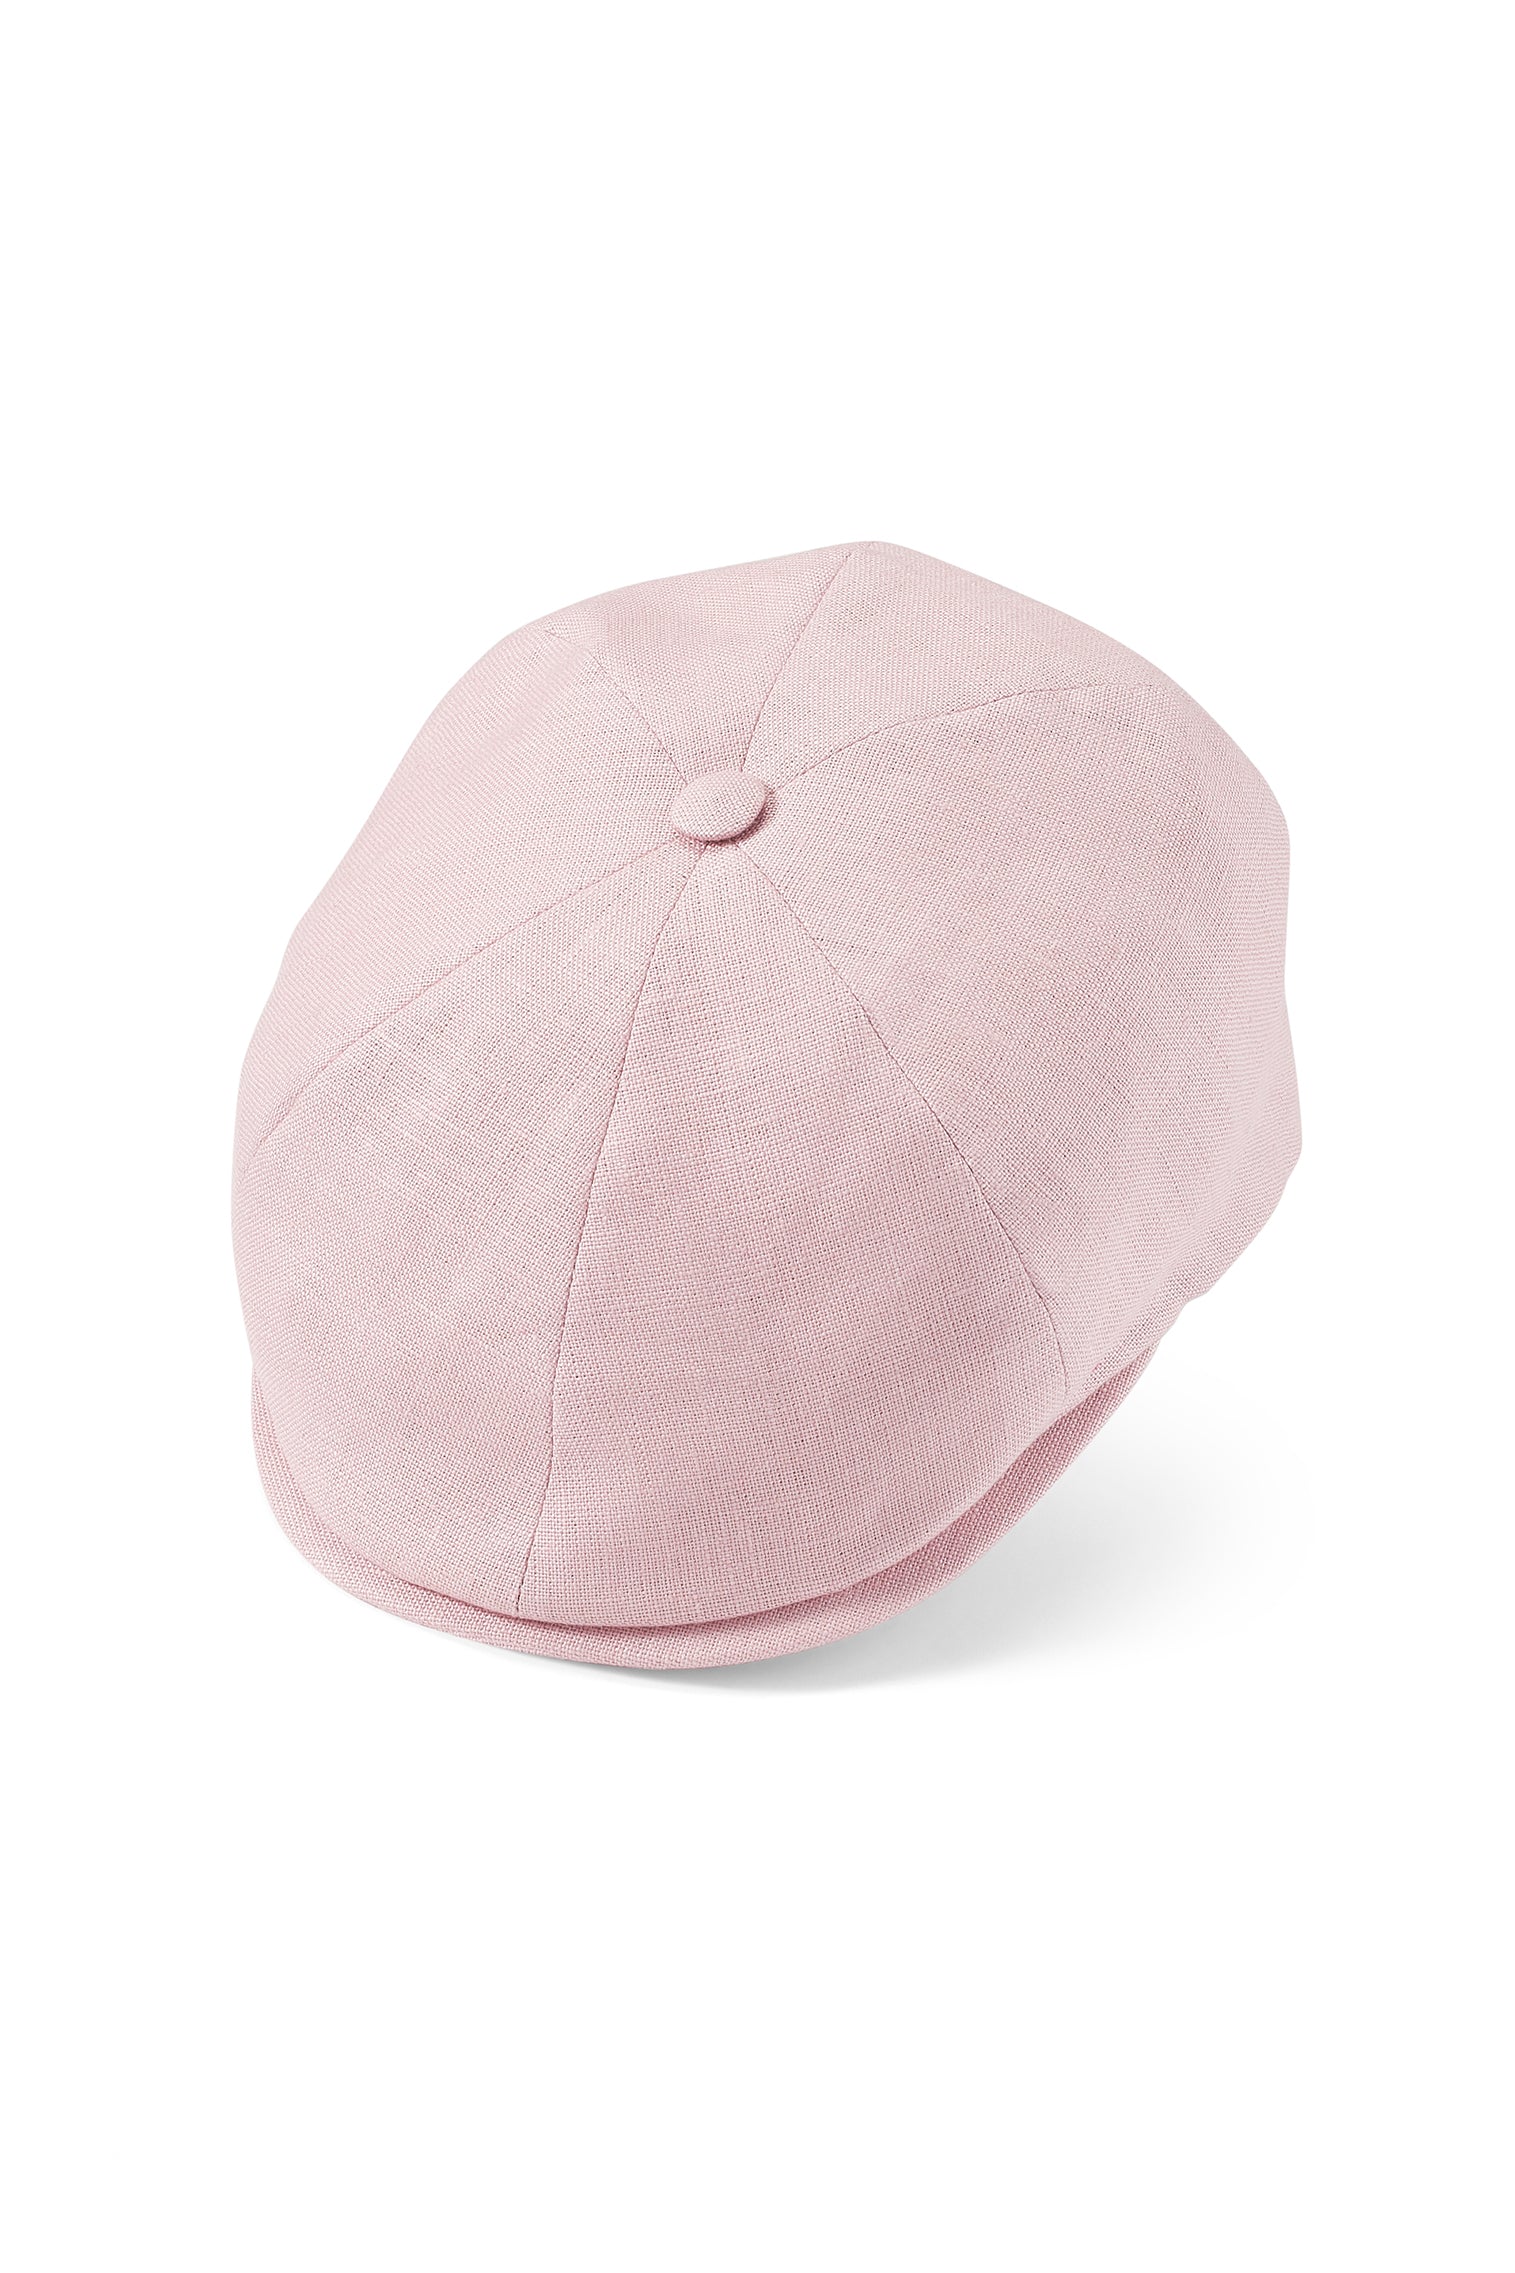 Tahoe Pink Bakerboy Cap - New Season Hat Collection - Lock & Co. Hatters London UK